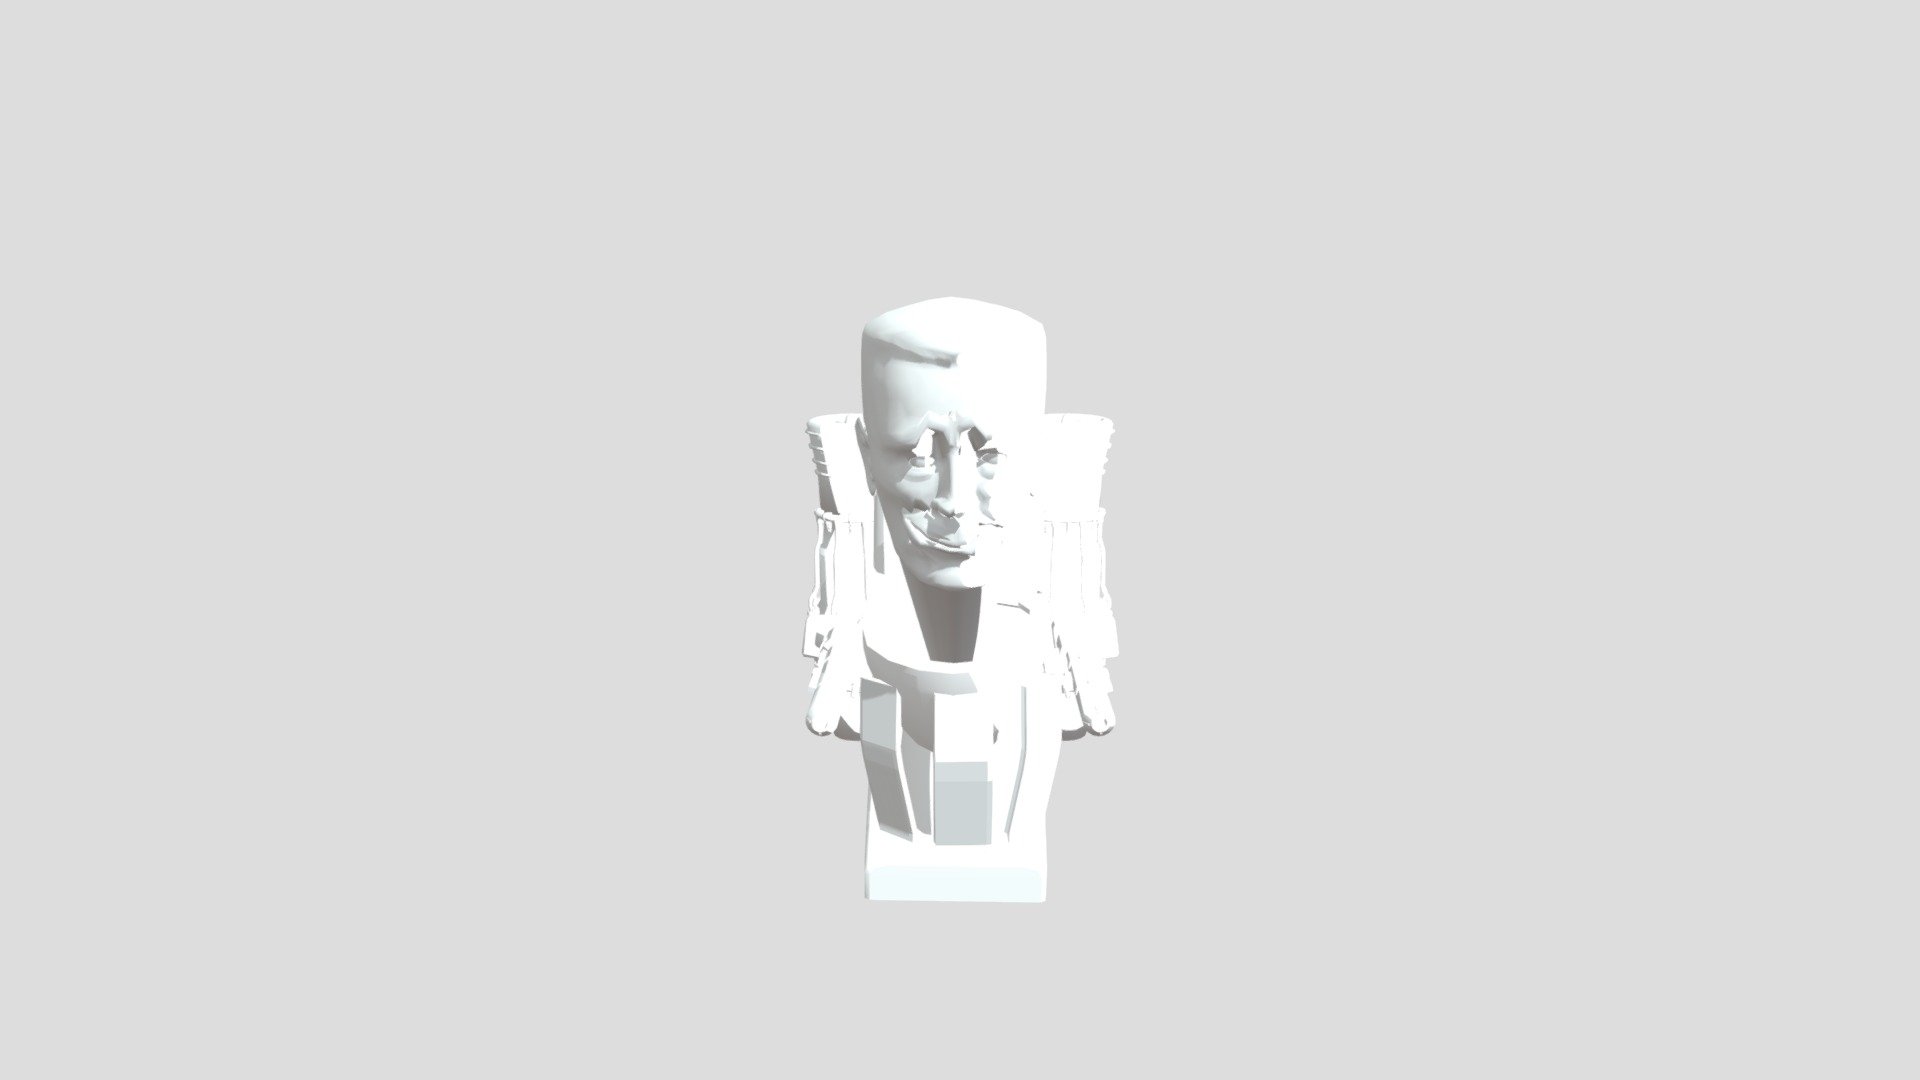 Broken G-man Skibidi Toilet / Imposter G-Man. - Download Free 3D model by  DeadlyModels (@DeadlyNoob) [1622815]